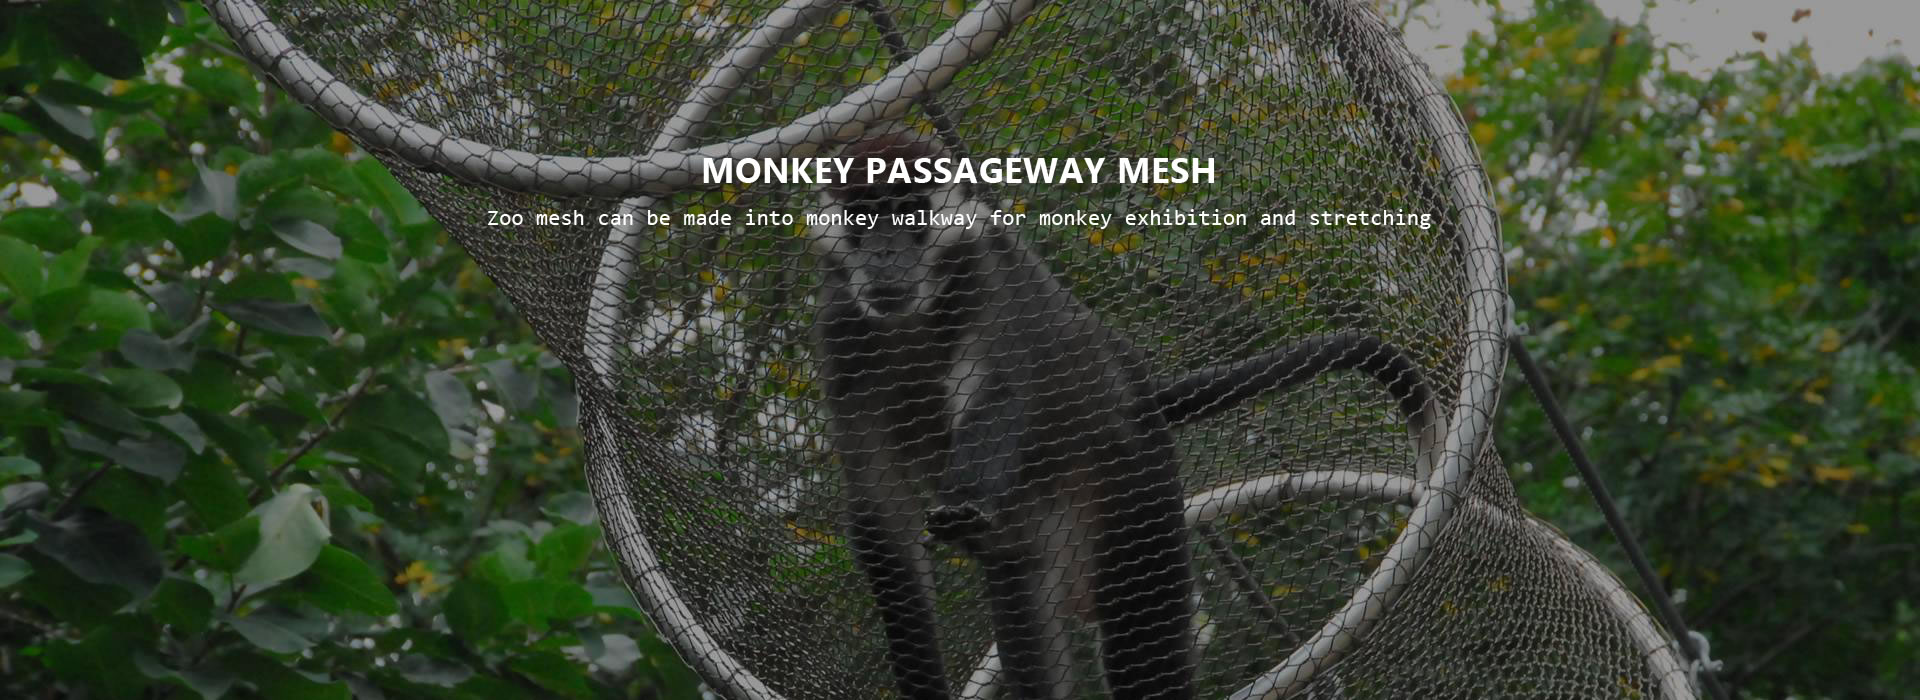 monkey passageway mesh